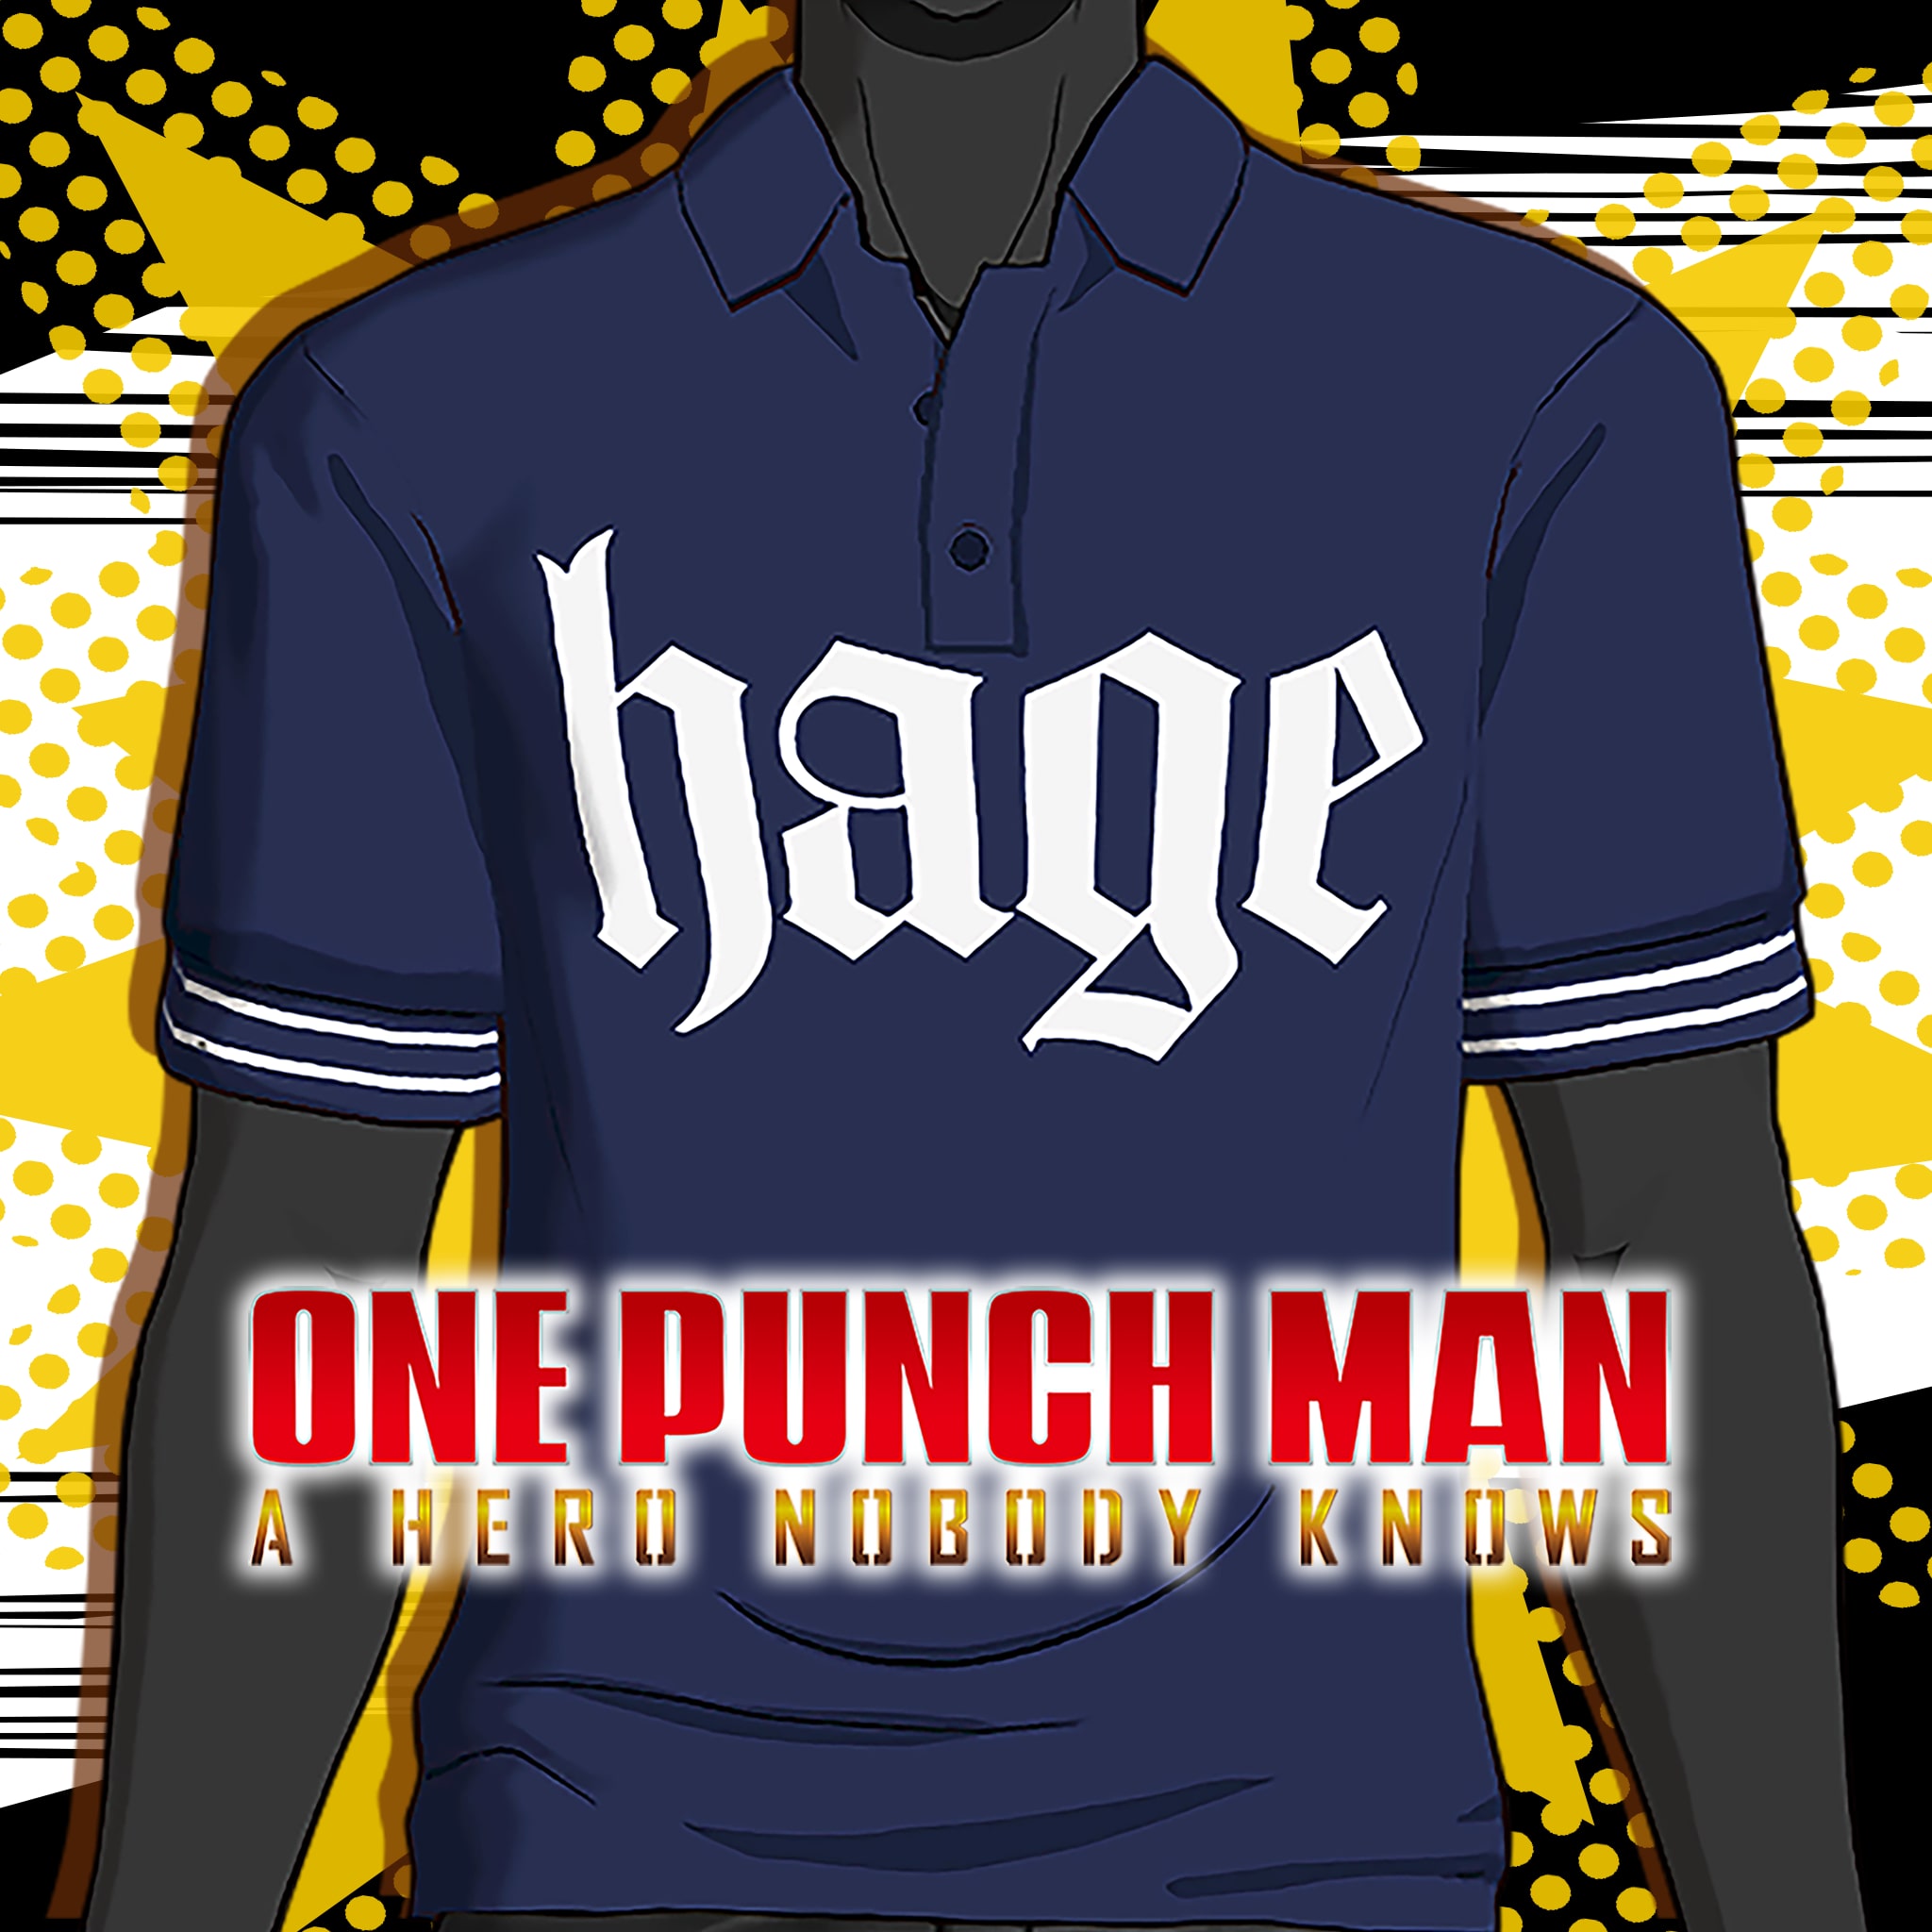 ONE PUNCH MAN: A HERO NOBODY KNOWS Camisa de polo 'hage'